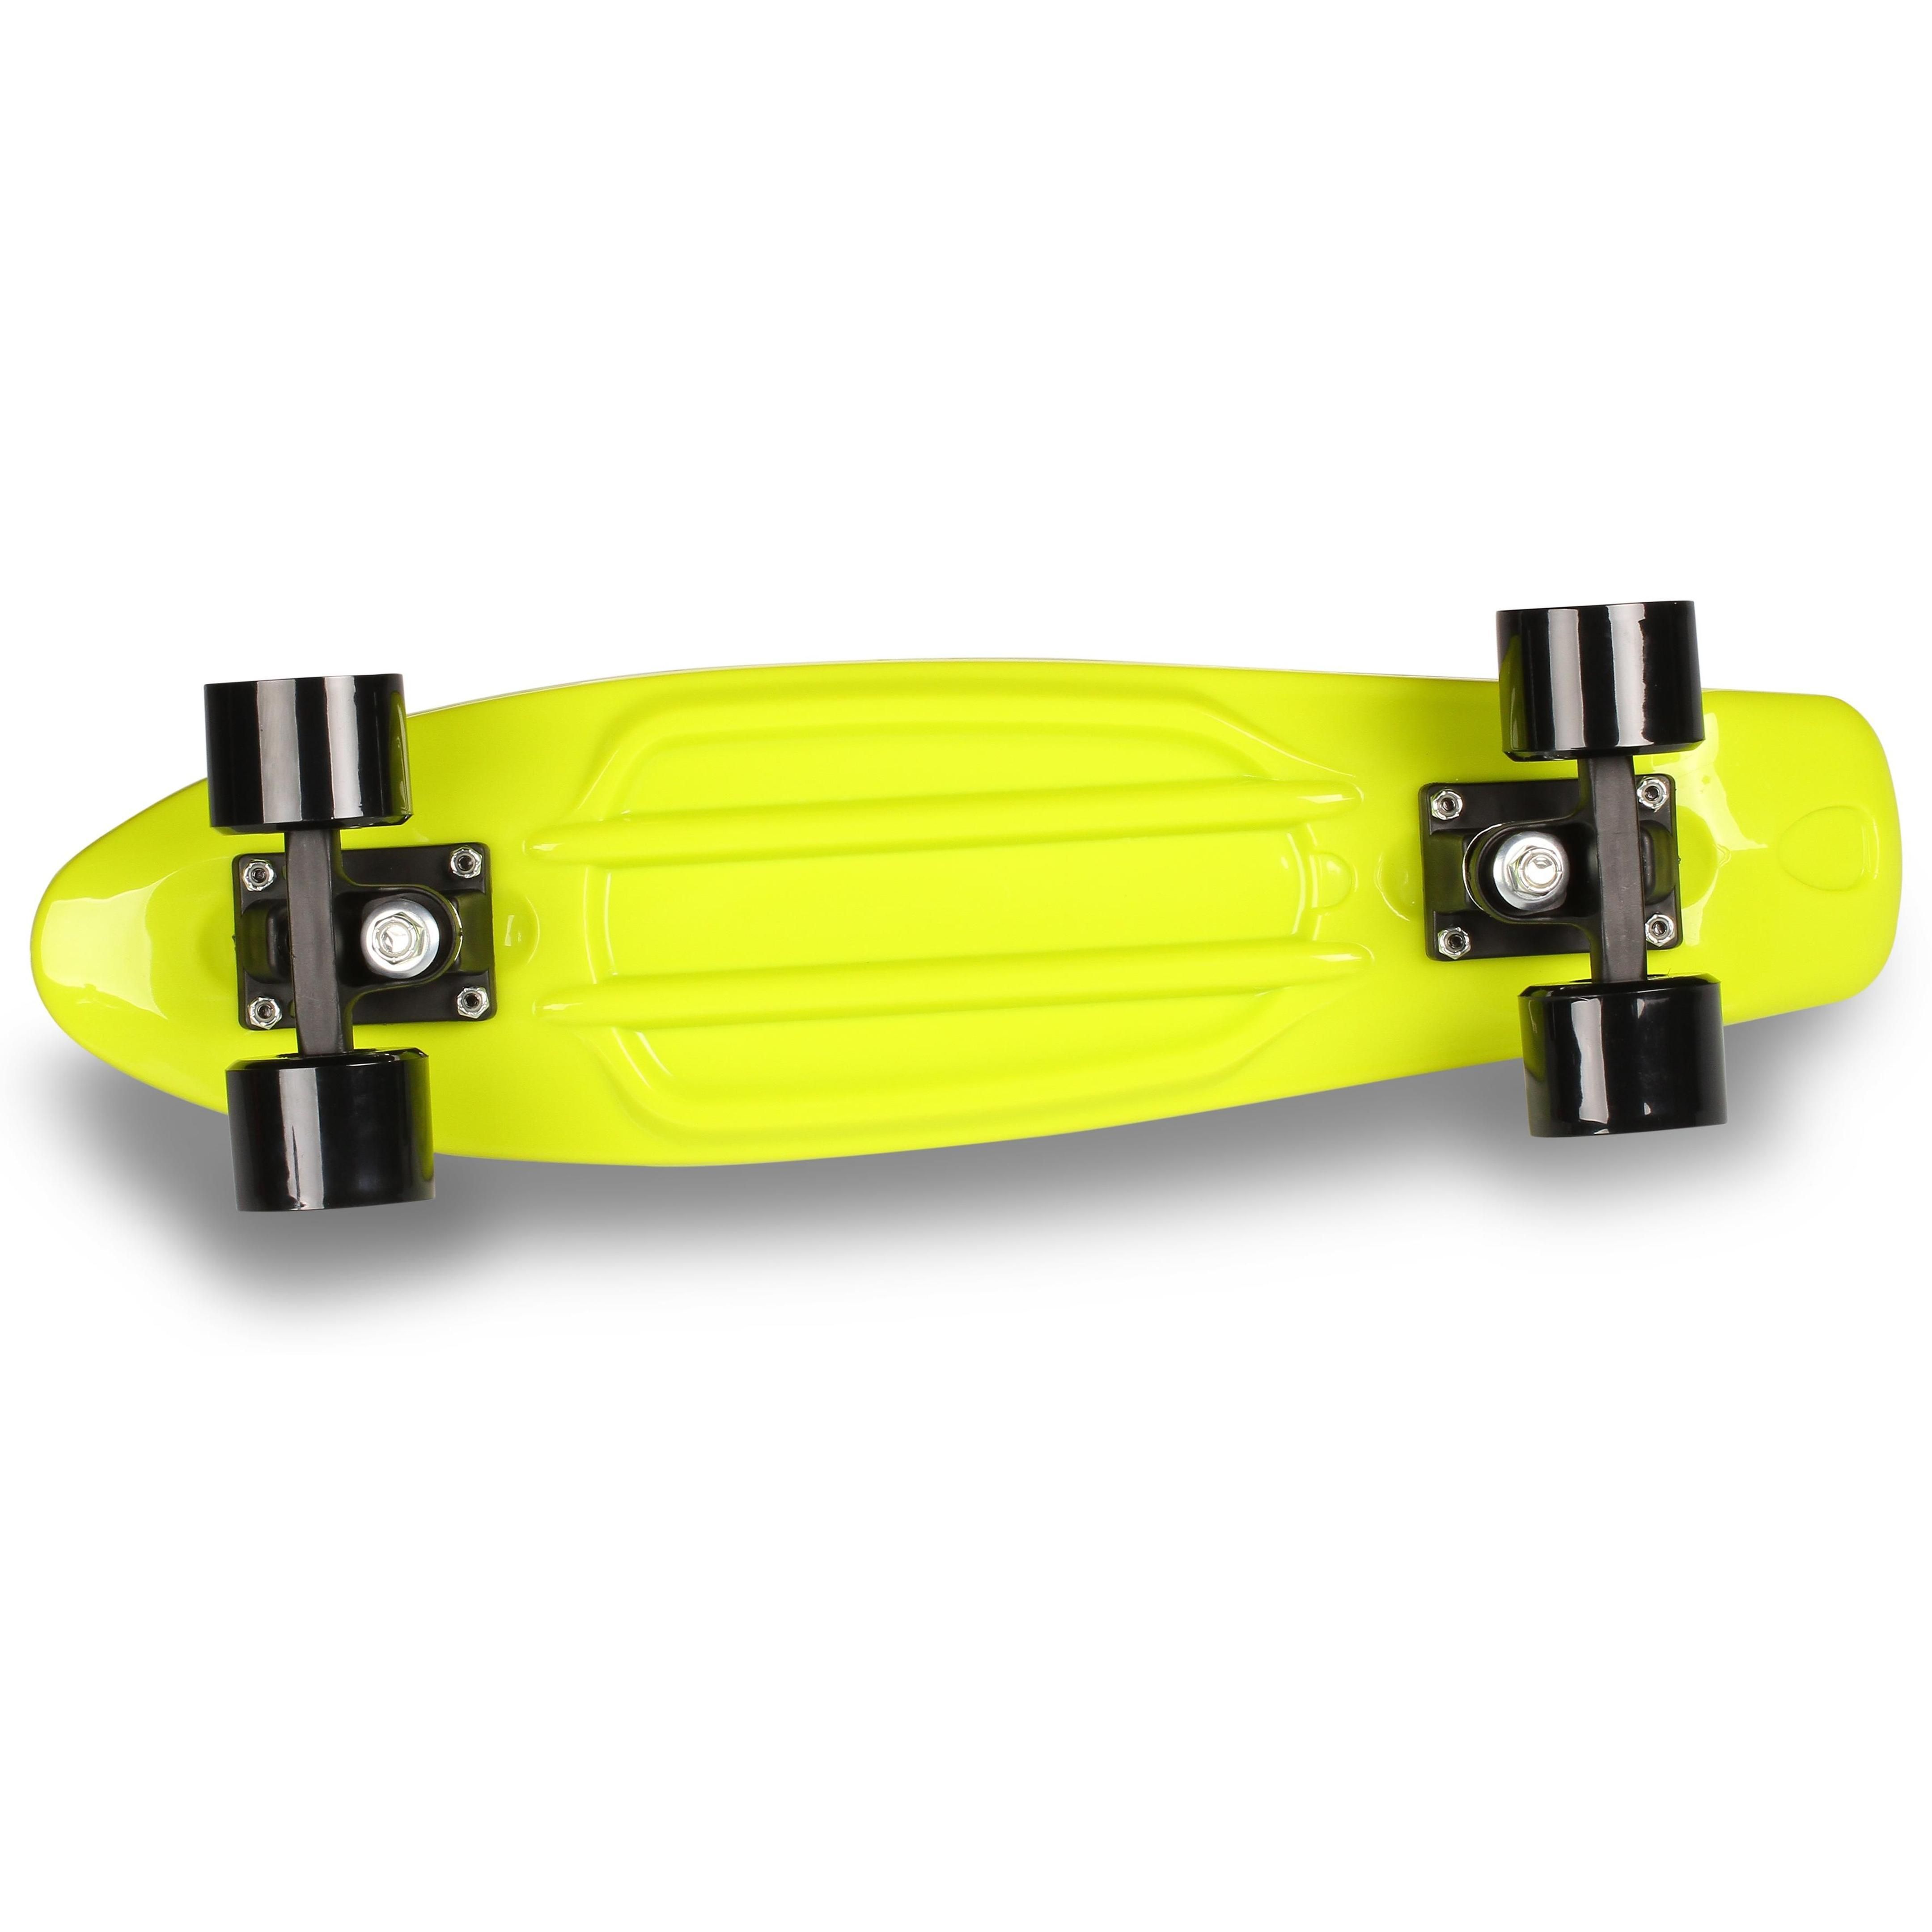 Skateboard de PVC Infantil INDIGO 56,5 * 15 cm Verde Claro